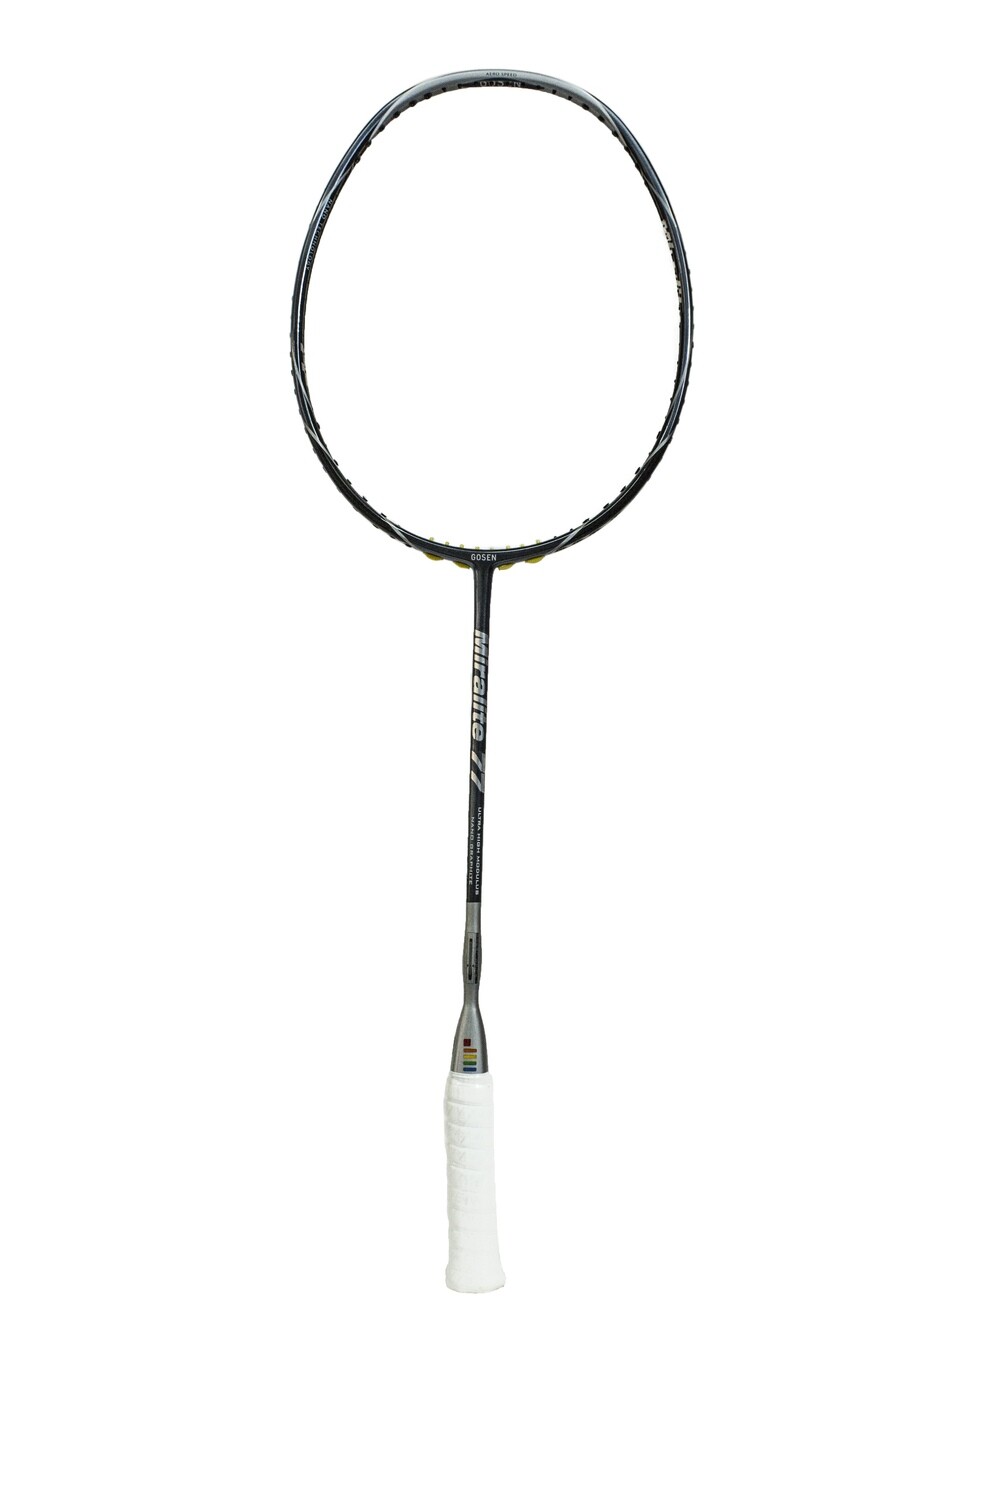 Gosen Miralite 77 Grey- Singe Piece Badminton Racquet